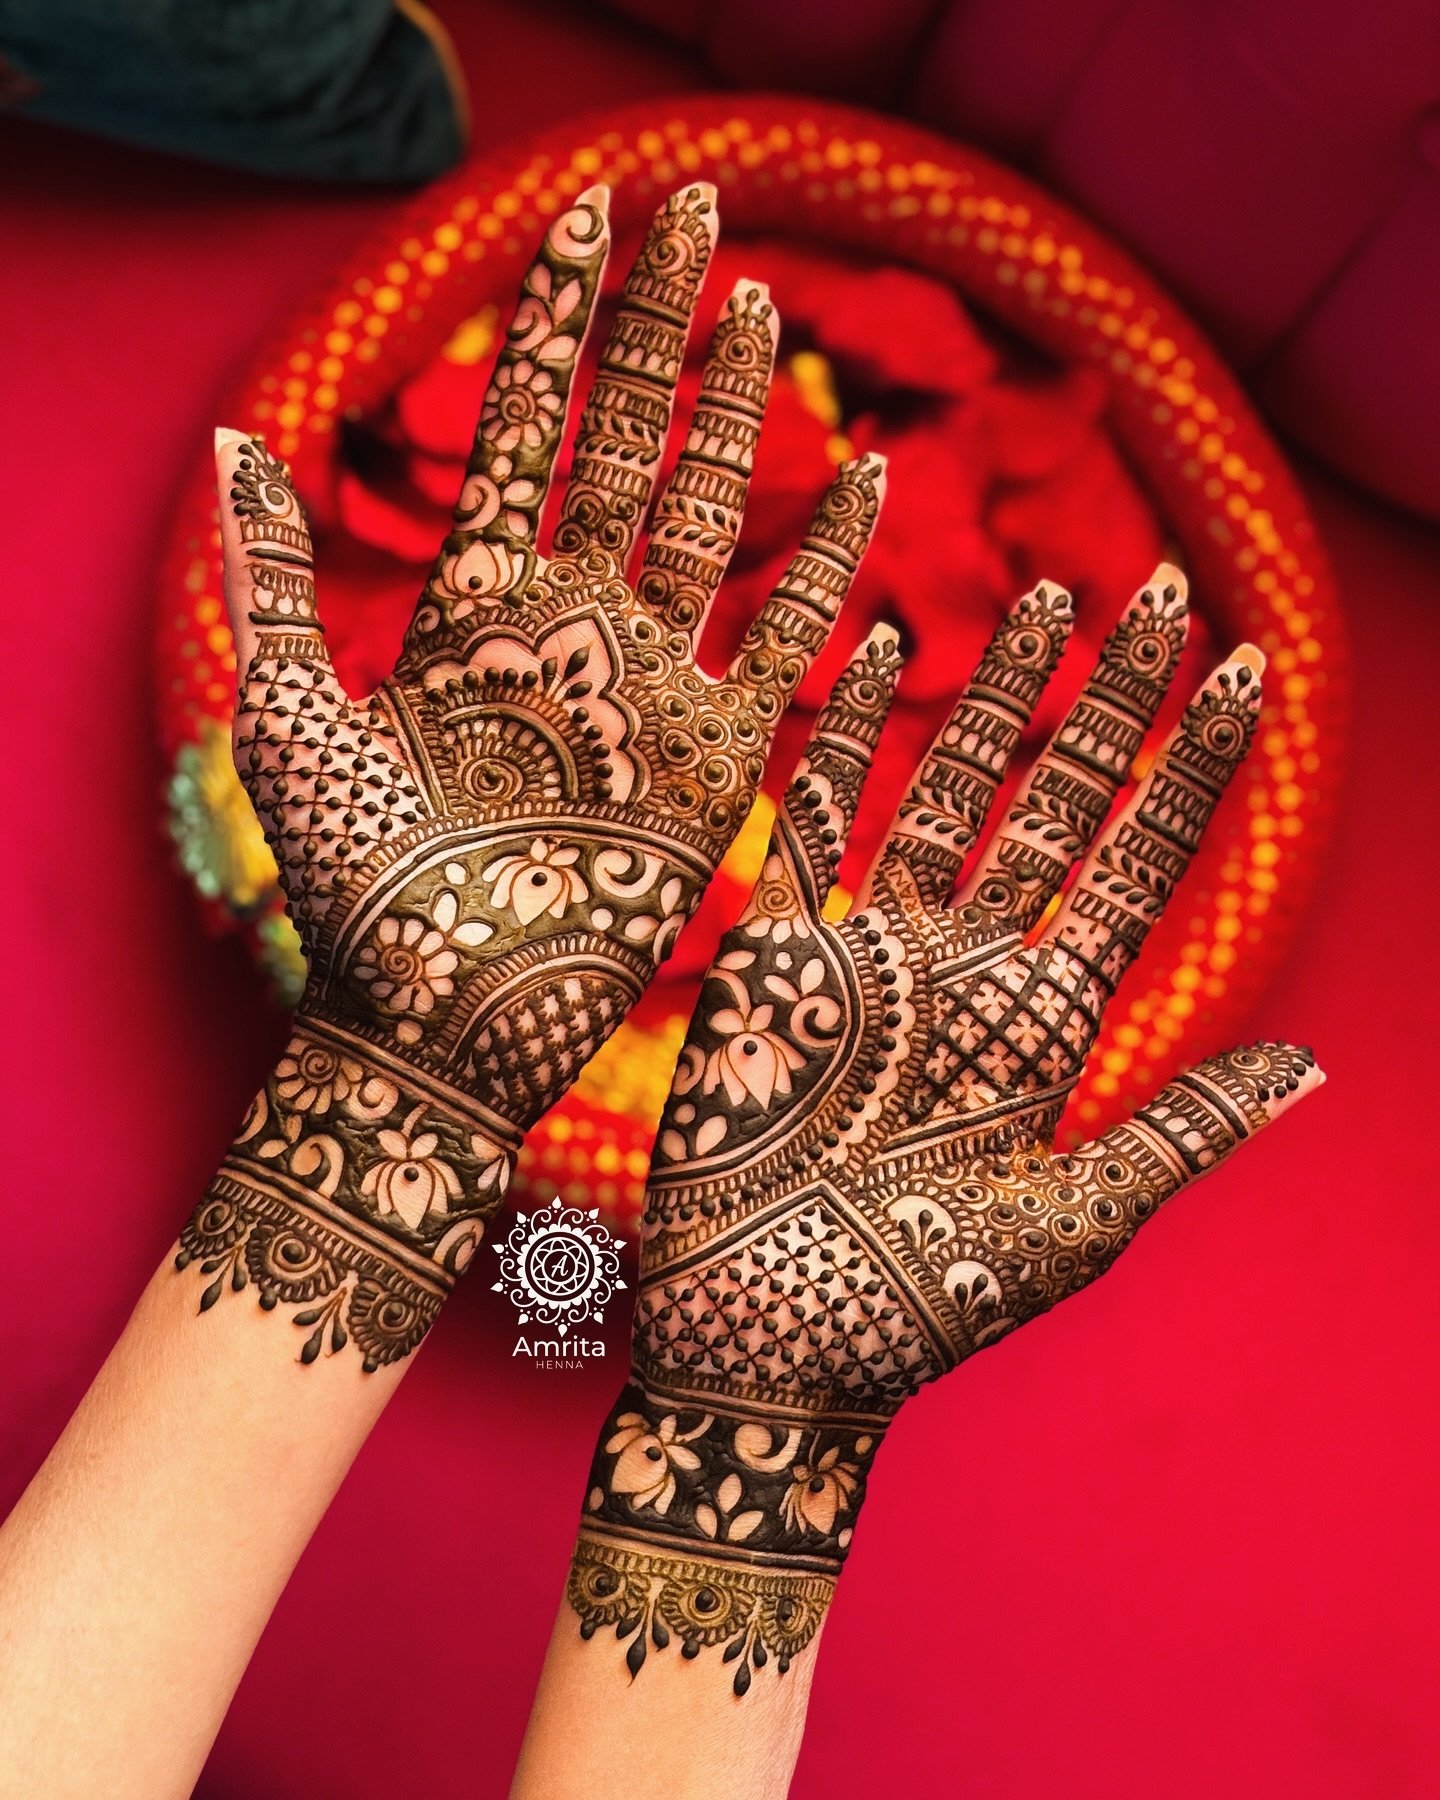 ✨ N A Y E L A H ✨

#HennaArt #MehndiMagic #amritahenna #bridalmehndi #hennadesign #wedmegood #orlandoart #bridalhenna #weddinginspo #indianwedding #orlandobride #mehandi #floridawedding #indianmehndi #weddinginspiration #weddingphotography #bridalfas